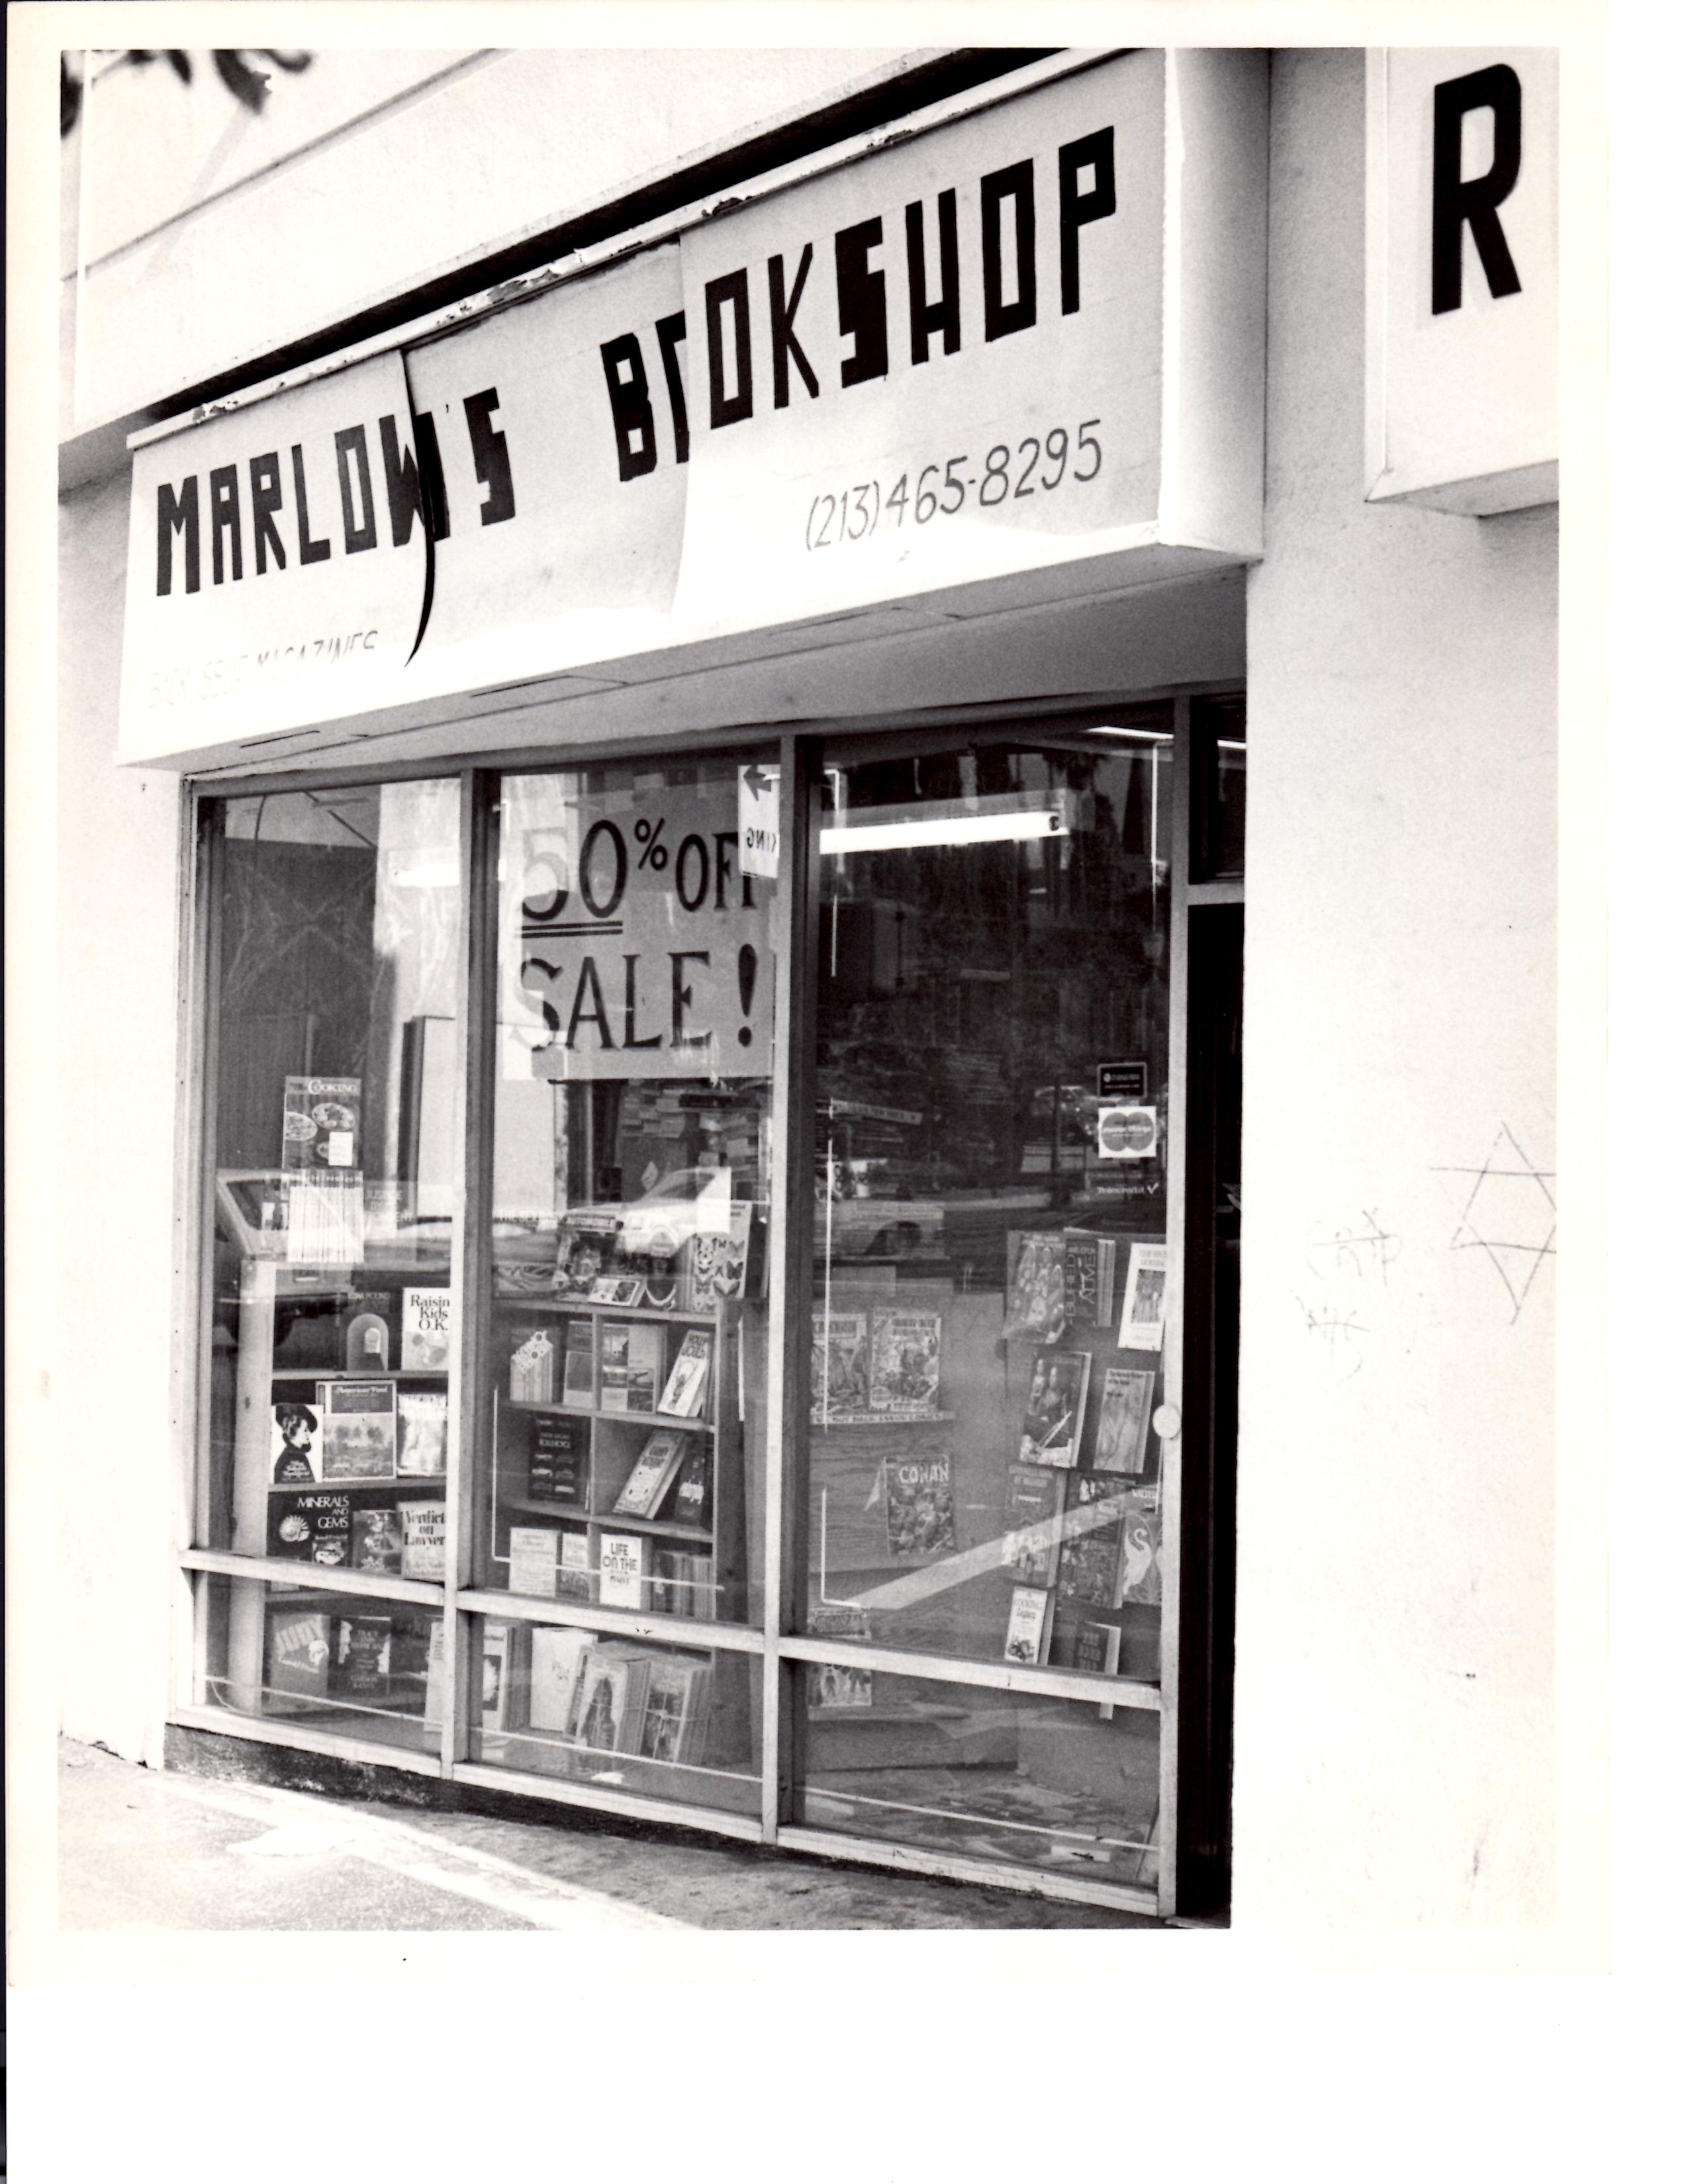 Marlow's Bookshop. Photo by Wayne Braby